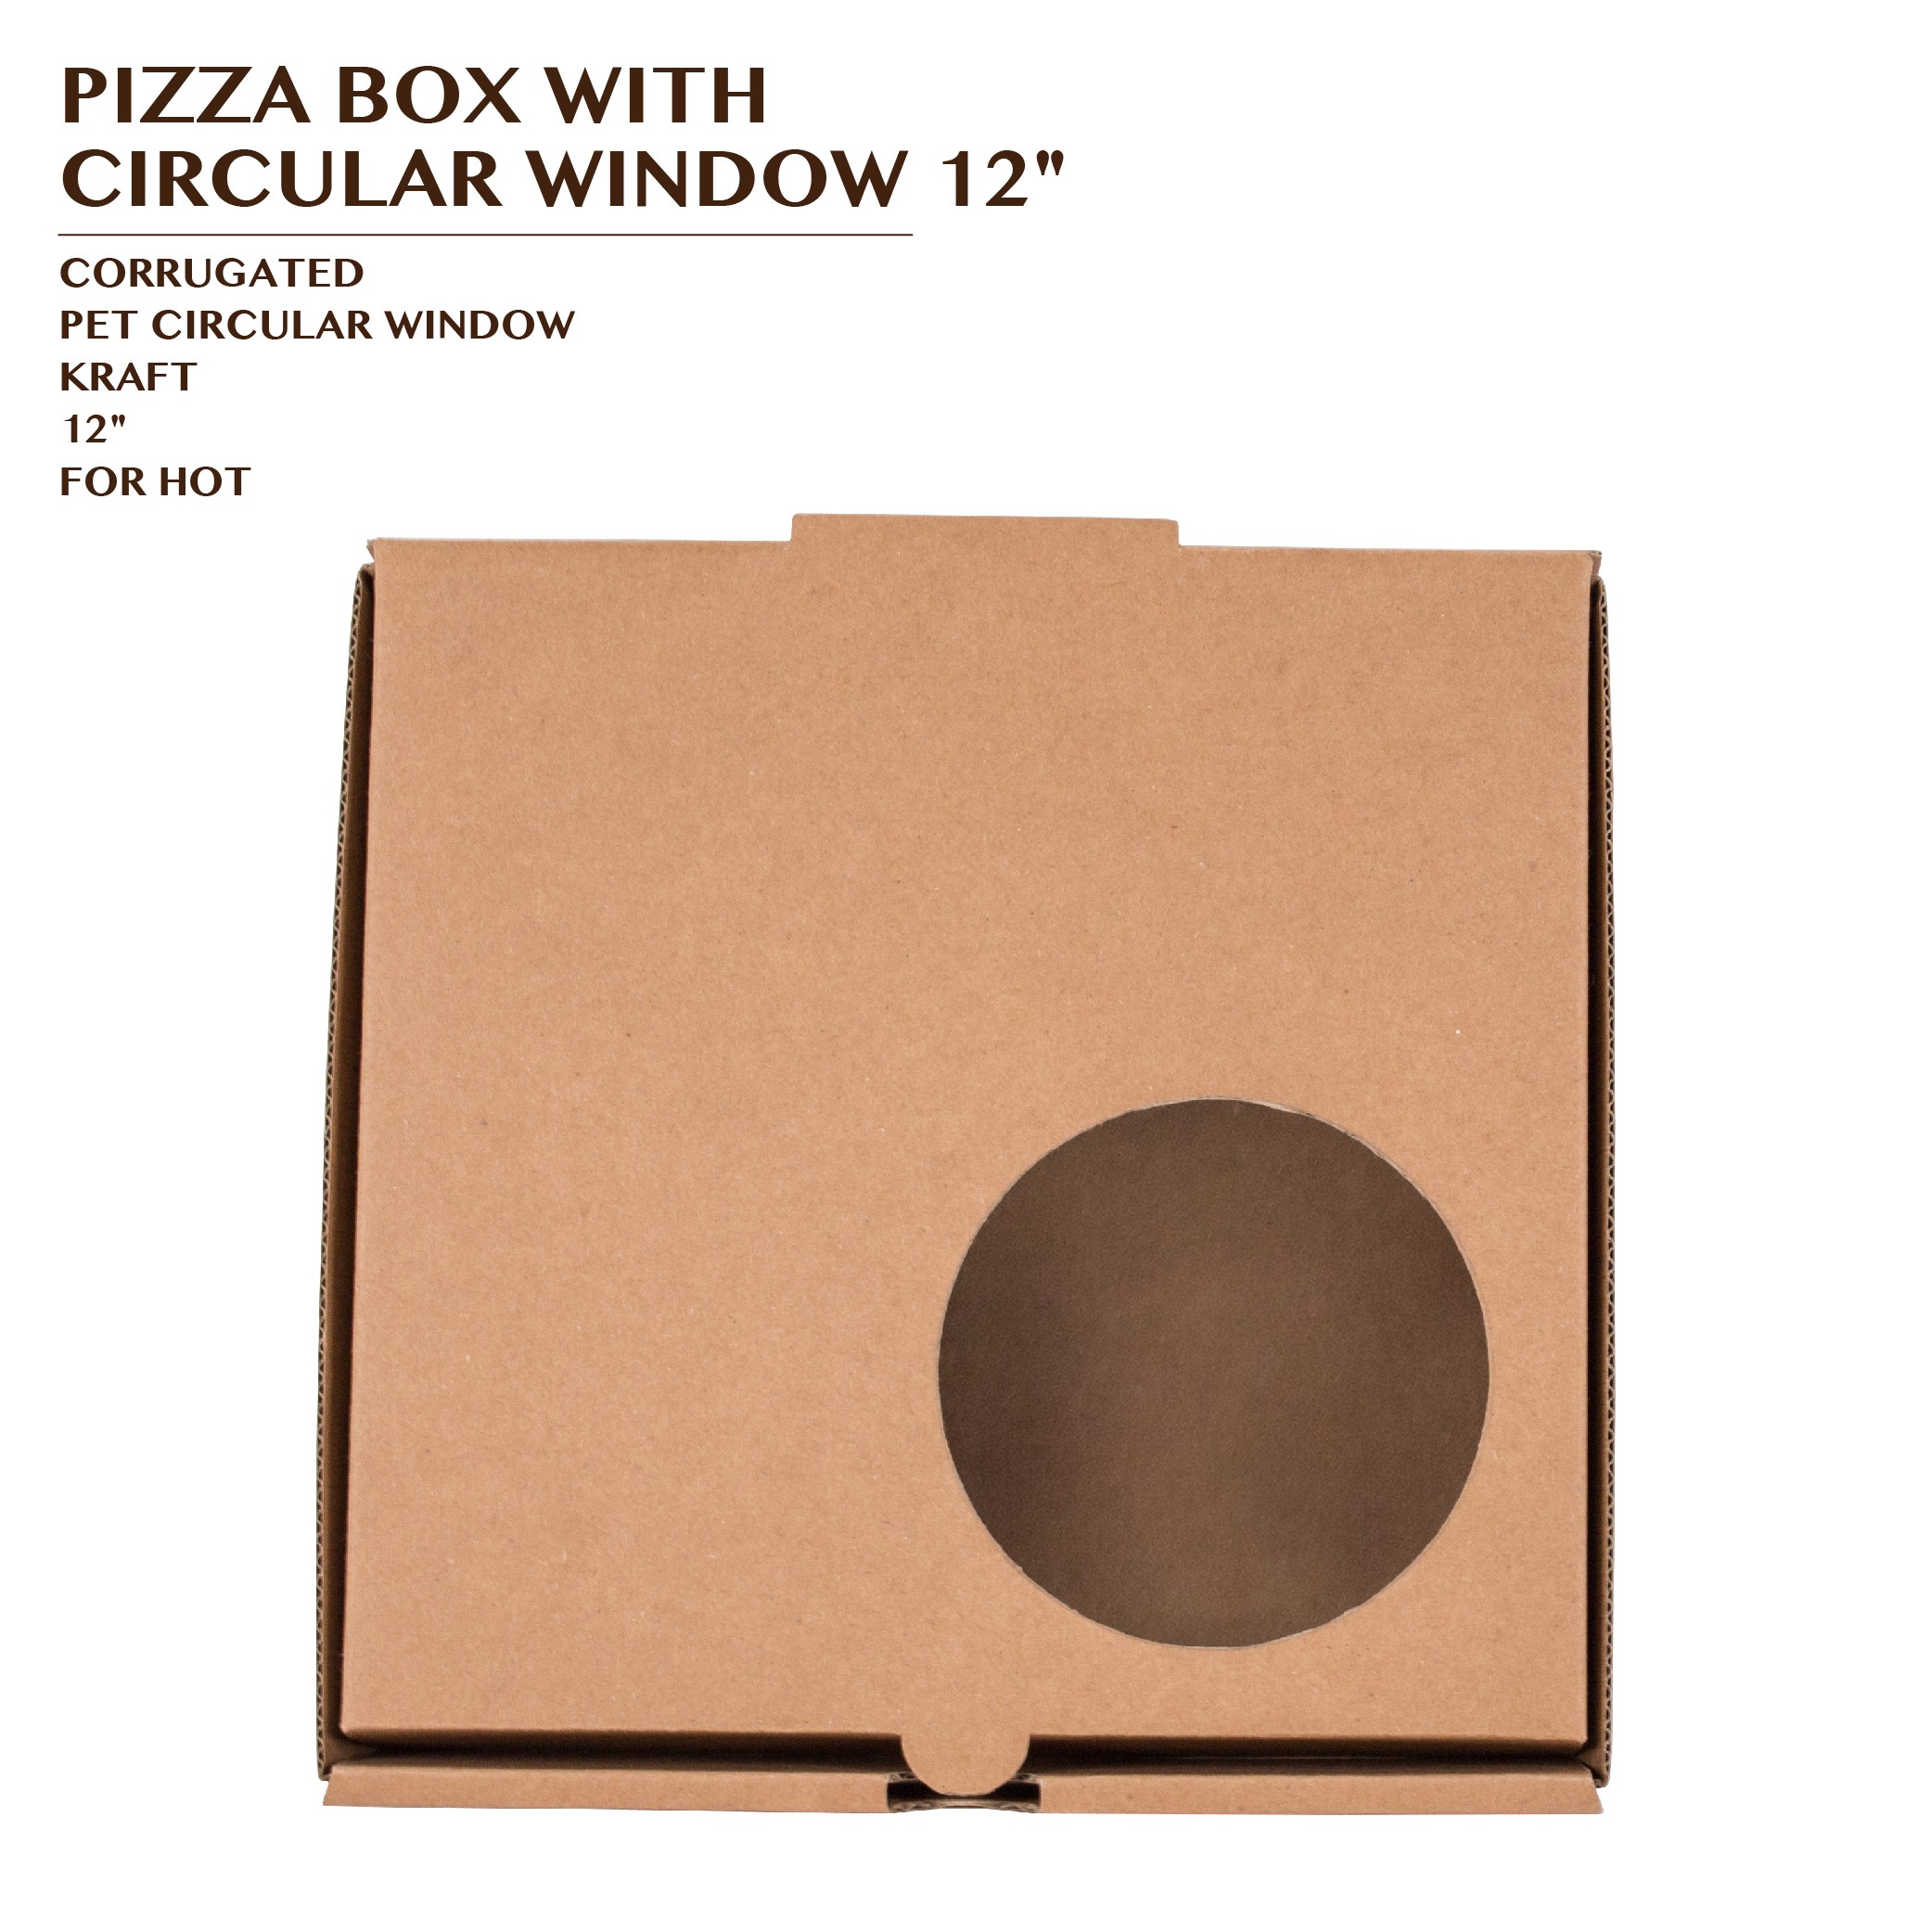 PRE-ORDER PIZZA BOX WITH CIRCULAR WINDOW 12"